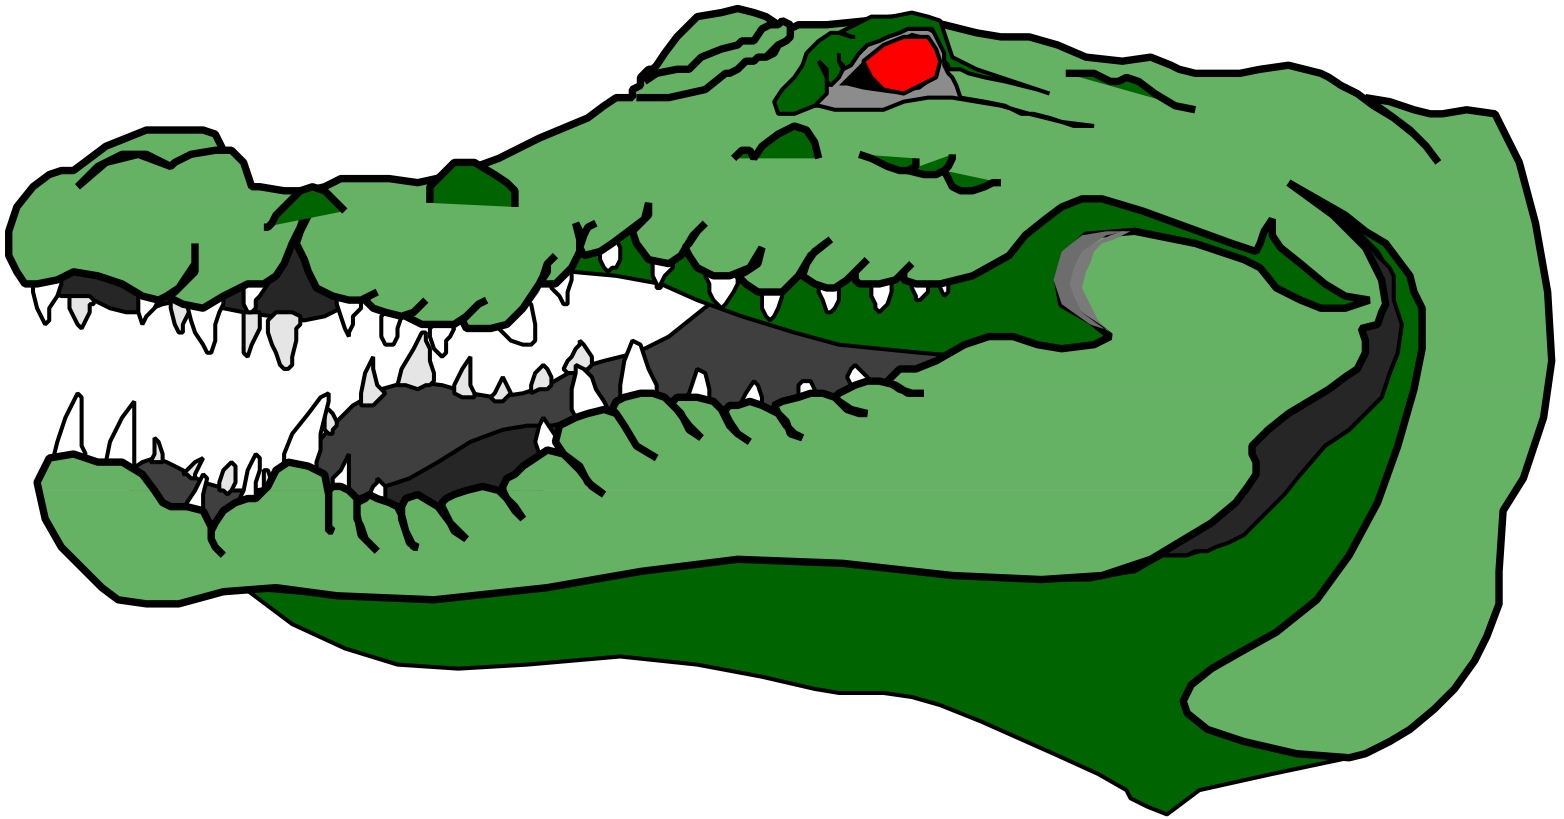 Cartoon Alligator Picture - Cliparts.co